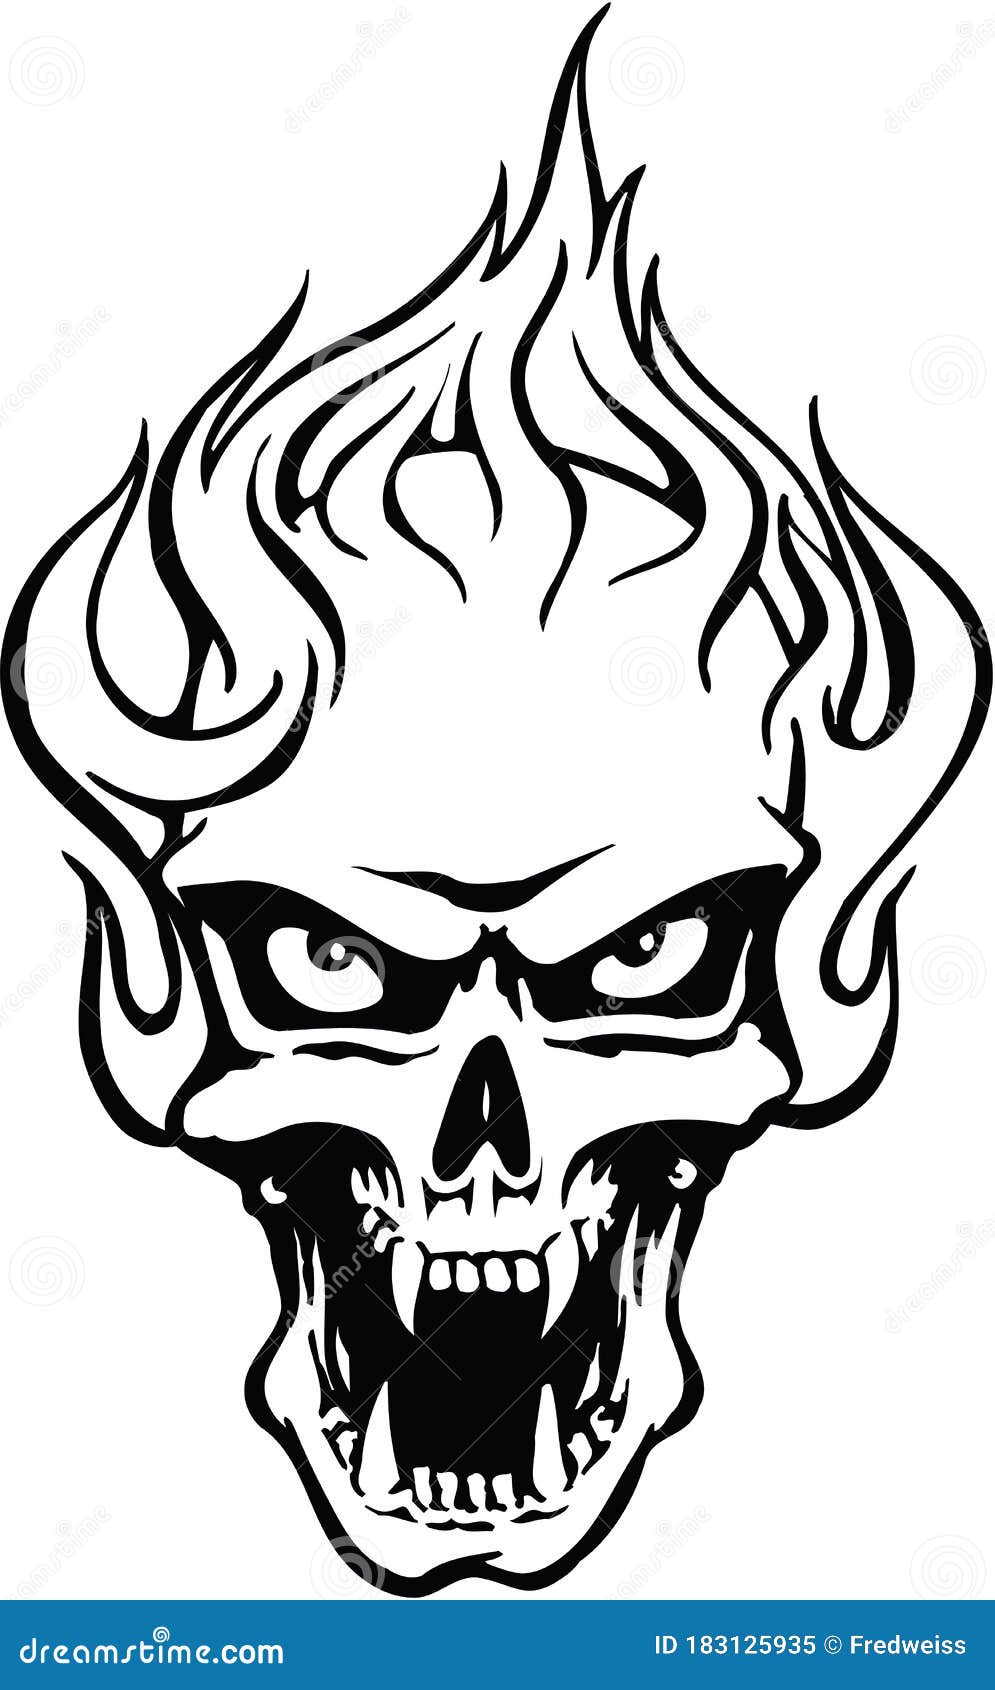 Flaming Skull Tattoo 2011 by vikingtattoo on DeviantArt